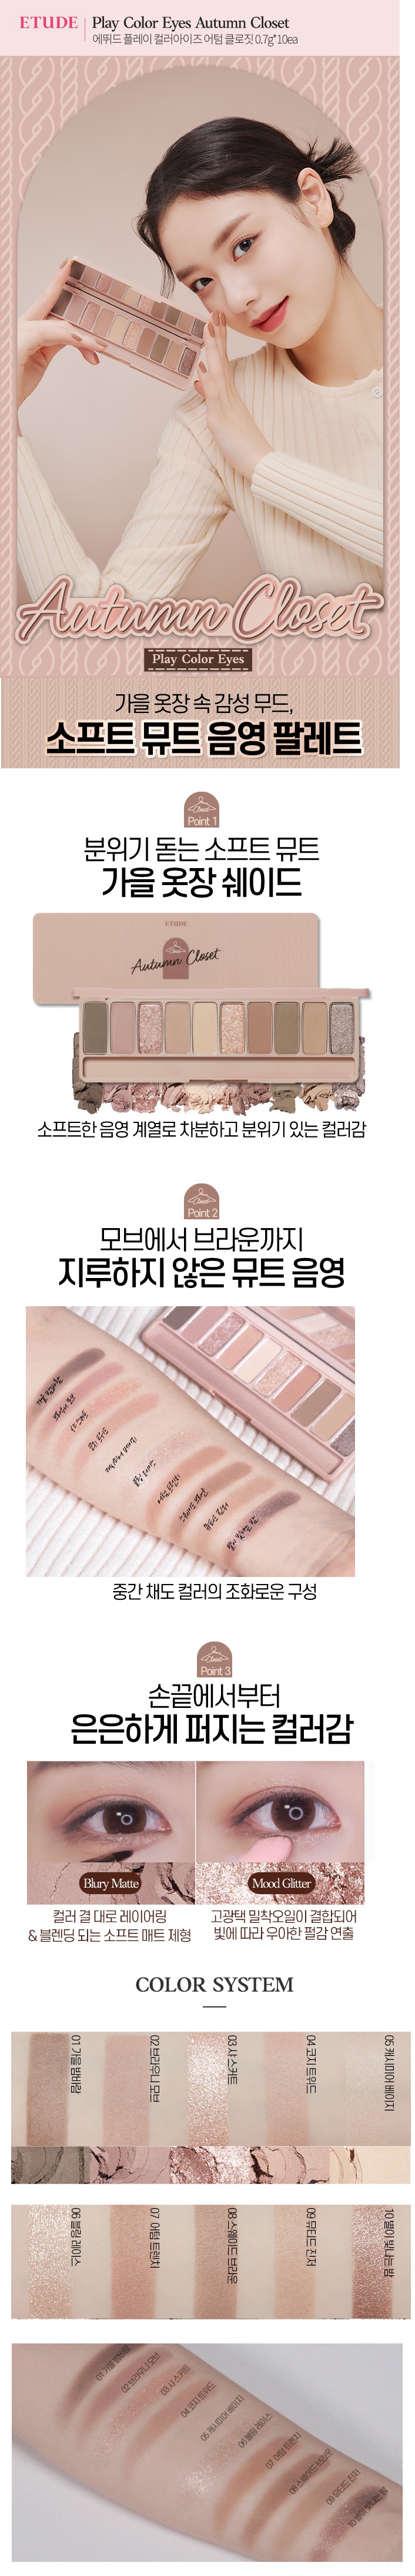 Etude House Play Color Eyes Autumn Closet korean skincare product online shop malaysia China taiwan1